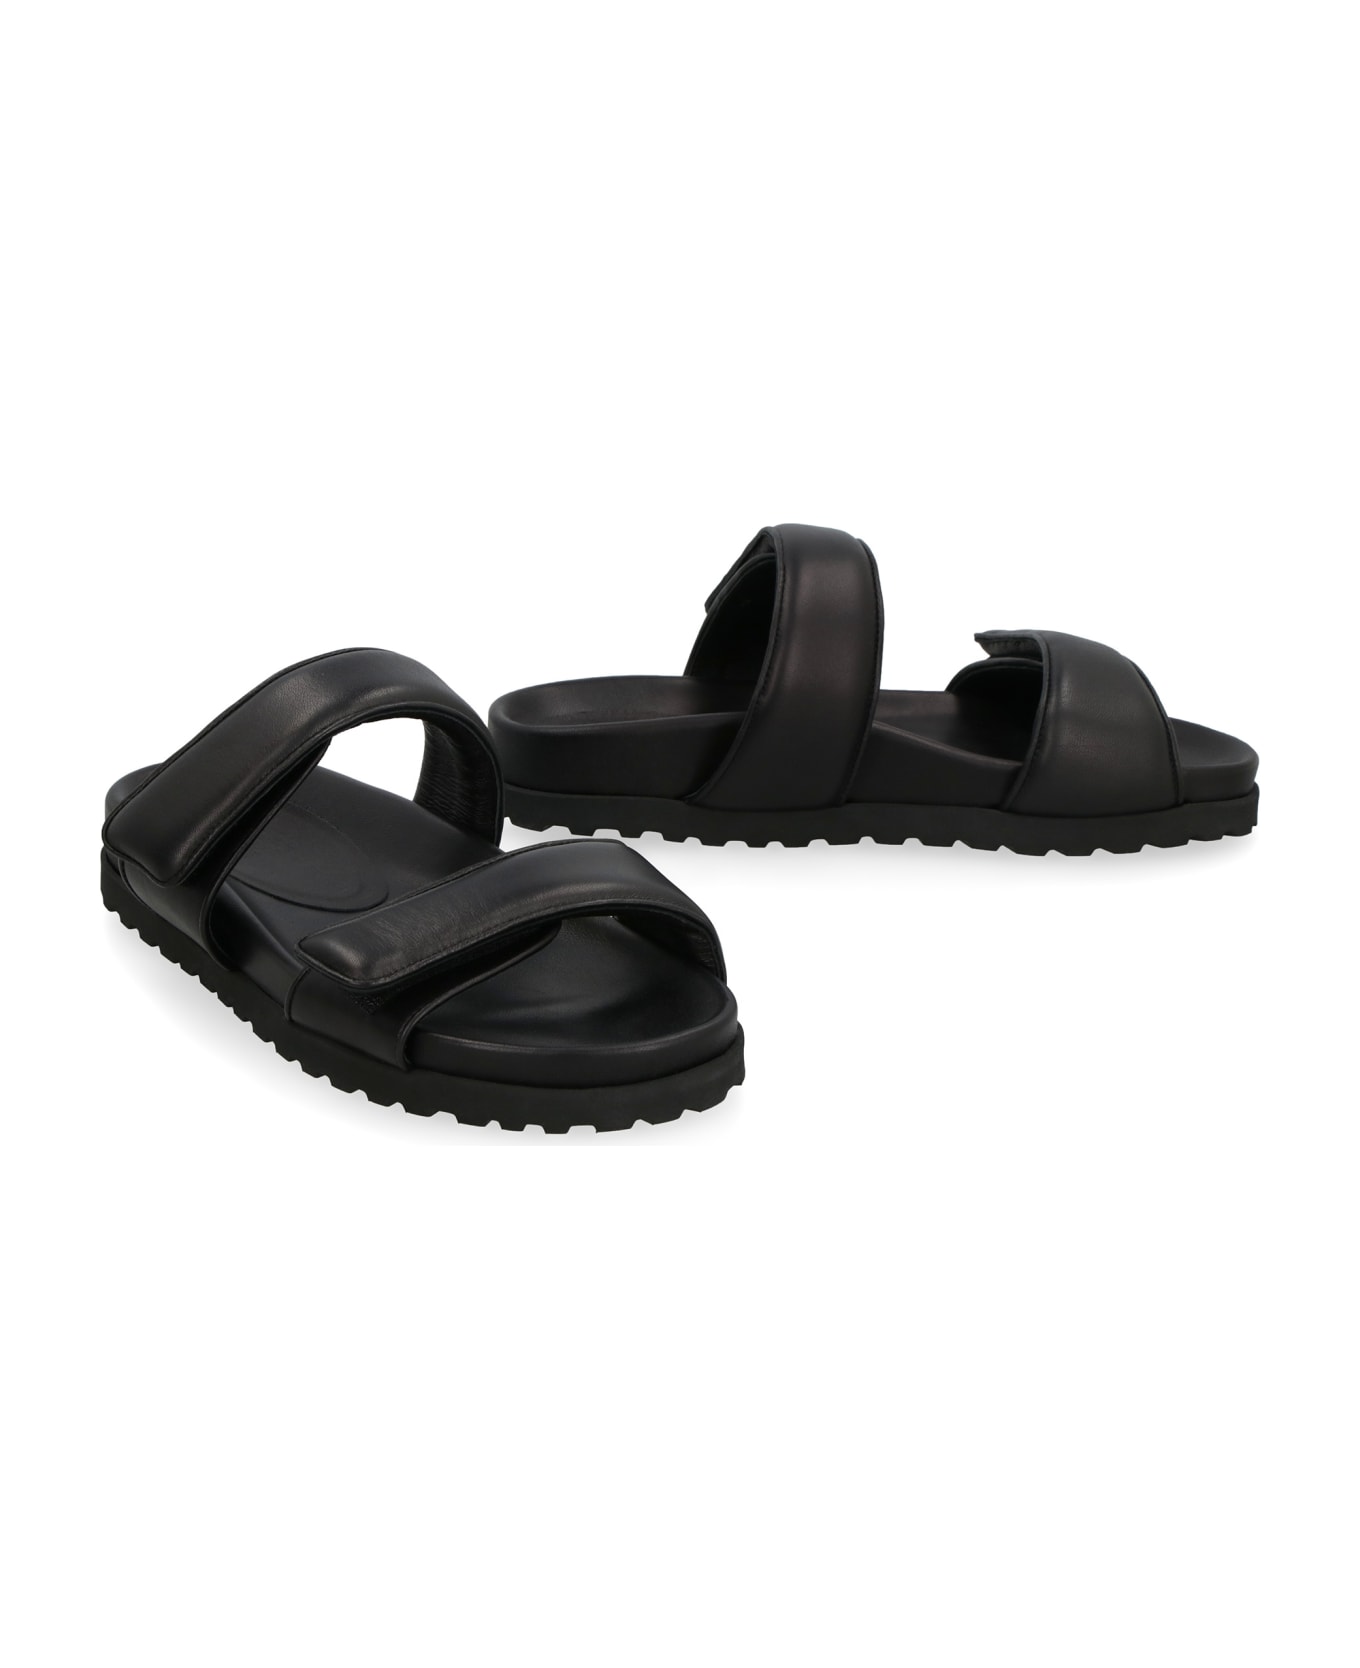 GIA BORGHINI Perni 11 Leather Flat Sandals - black